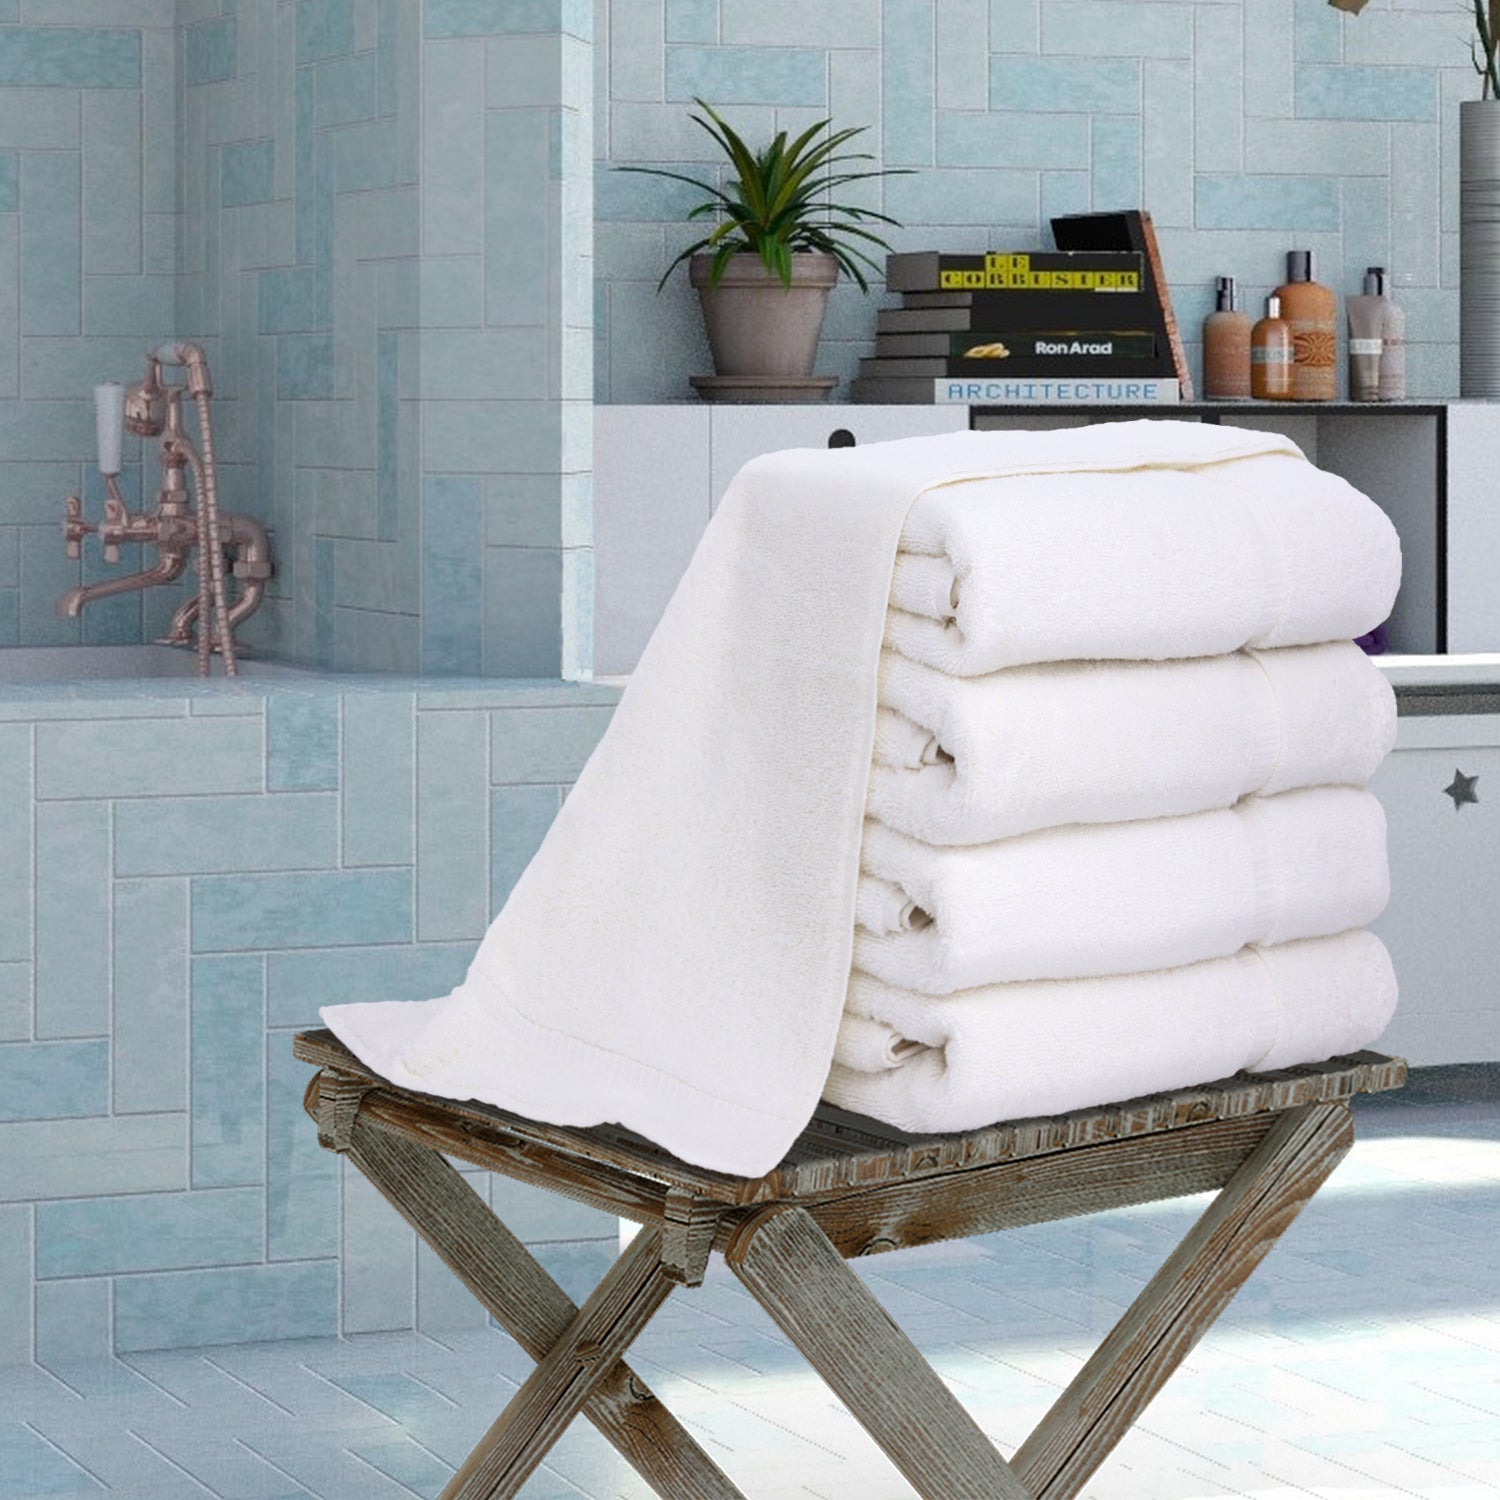 Luxury Hotel and Spa Towel 100-percent Genuine Turkish Cotton Bath